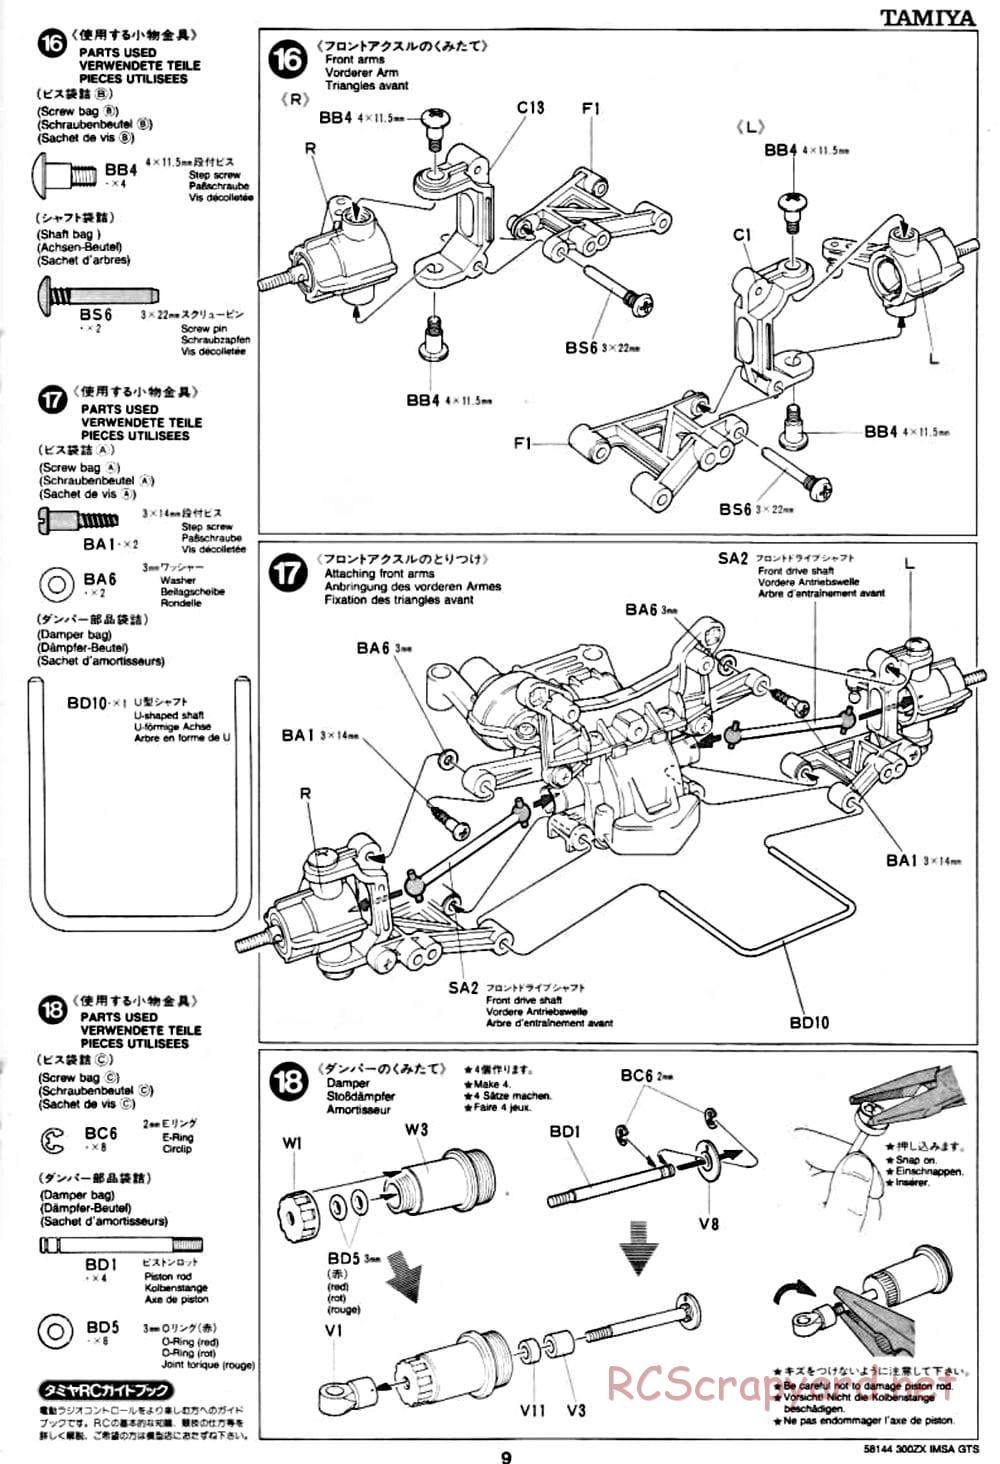 Tamiya - Nissan 300ZX IMSA-GTS - TA-02W Chassis - Manual - Page 9